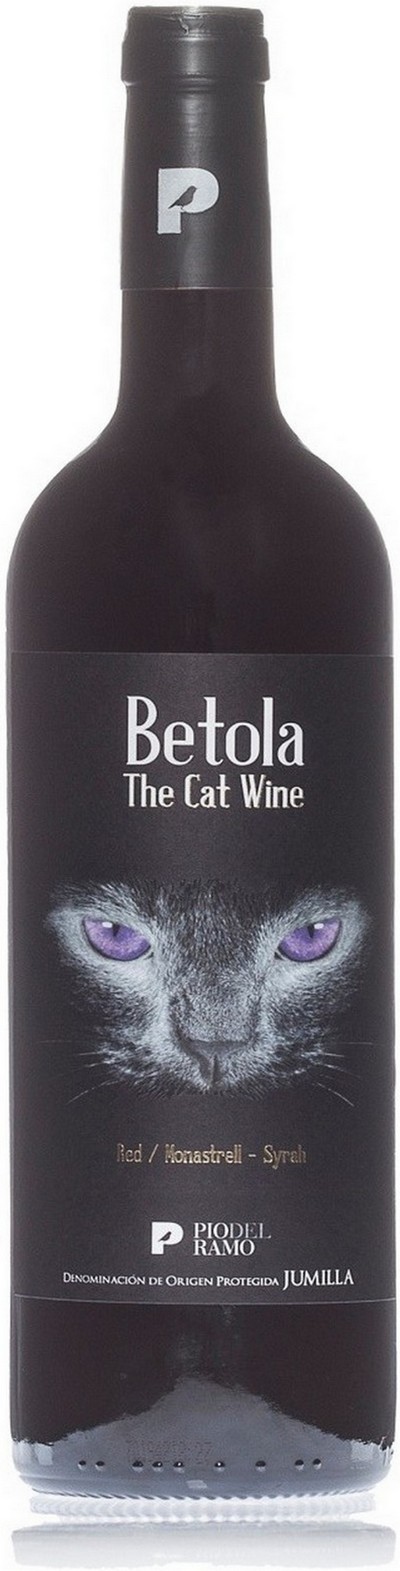 betola-the-cat-wine-red-ecologico-2020